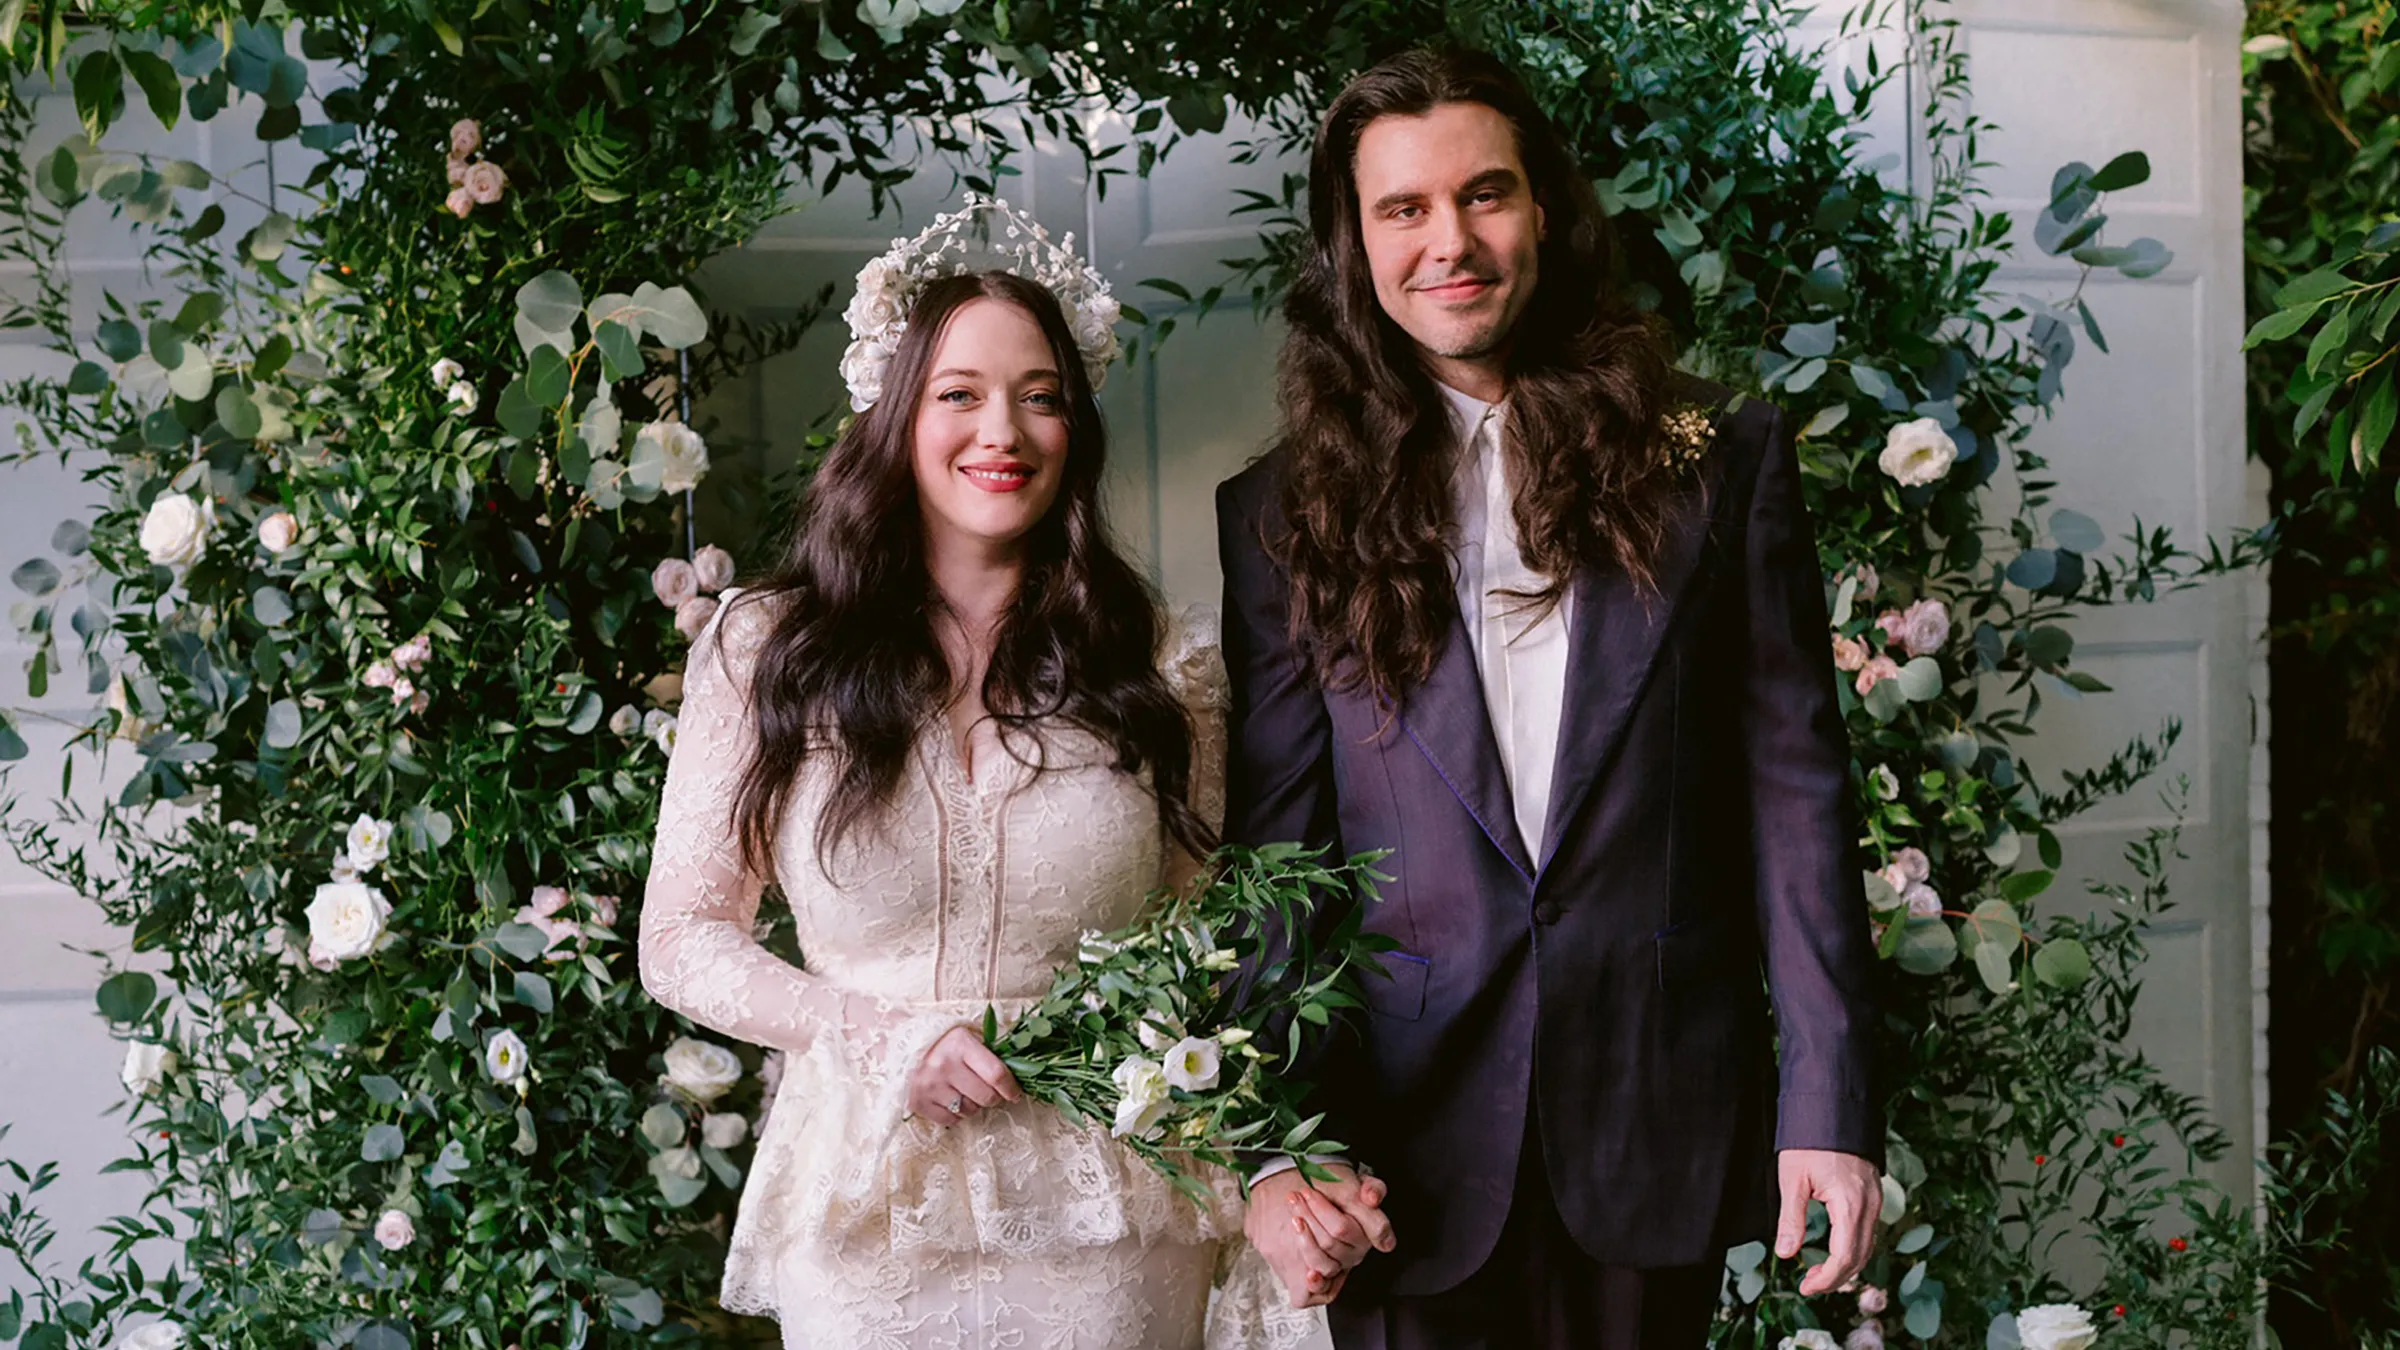 https://therockrevival.com/wp-content/uploads/2023/12/Andrew-W-K--Kat-Dennings-wedding-Vogue-Jose-Villa--jpg.webp